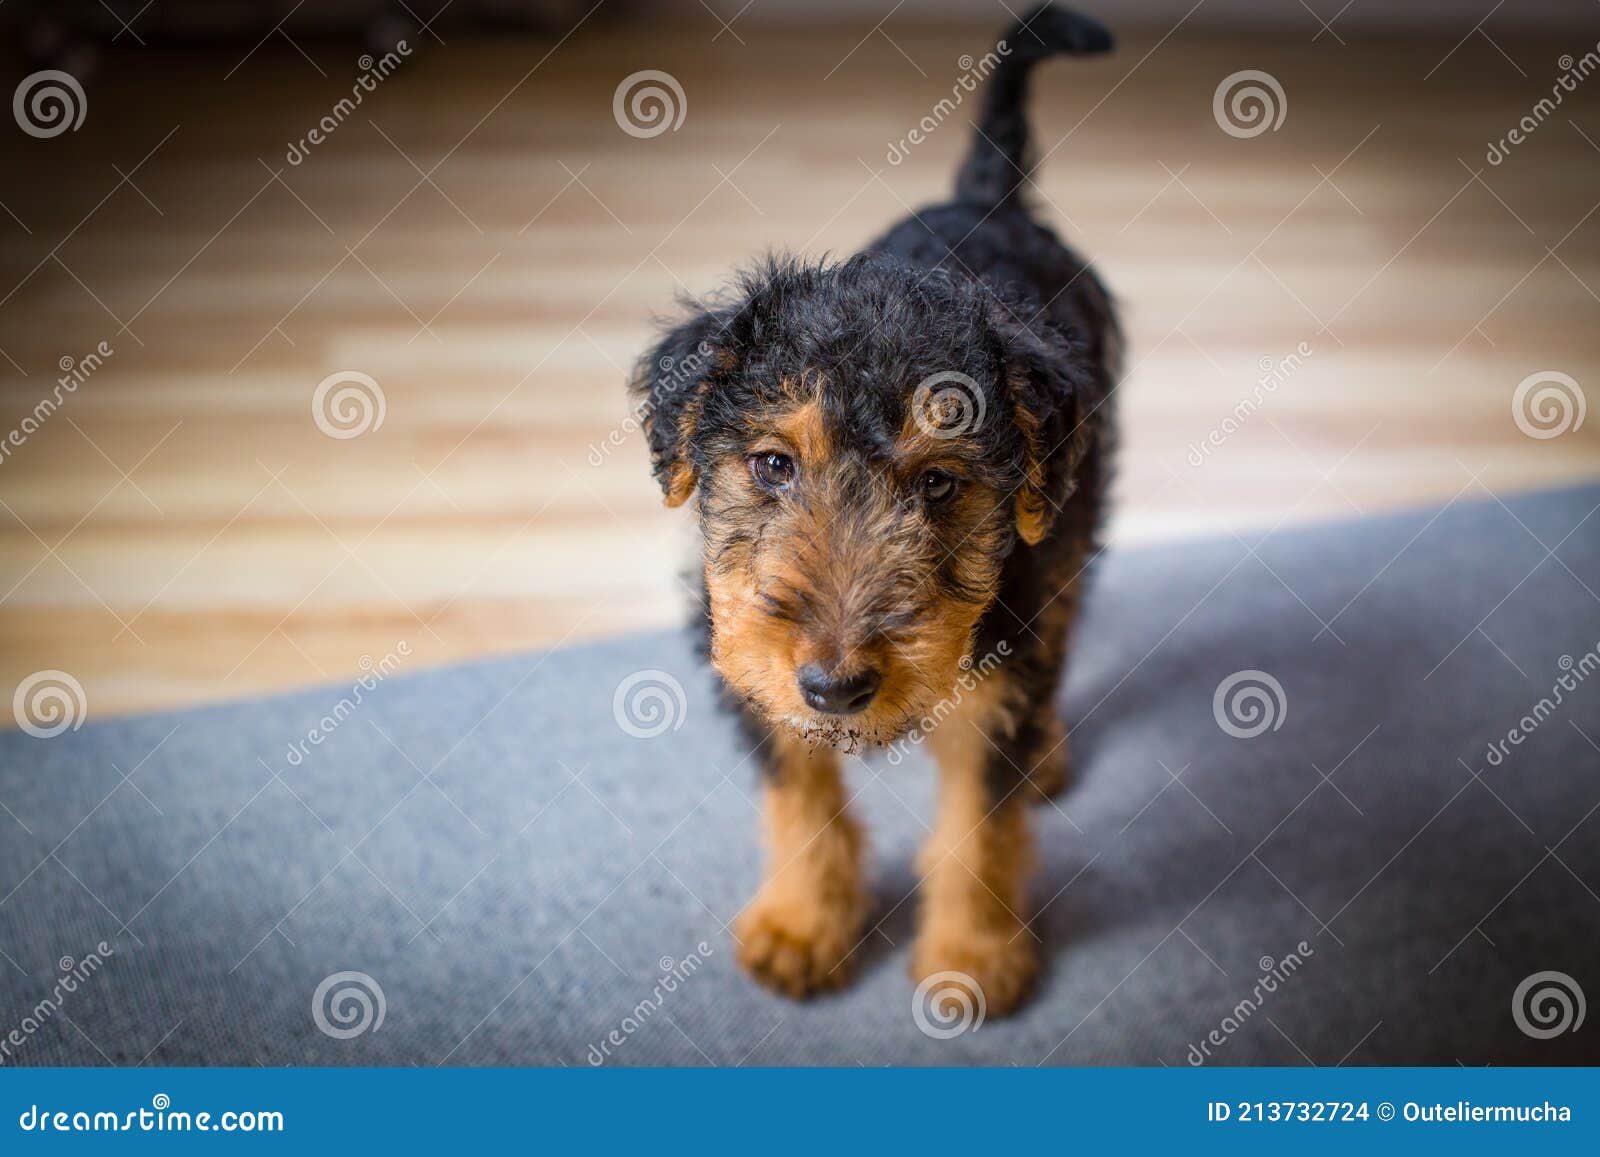 dog. welsh terrier puppy, cute, adorable pet.